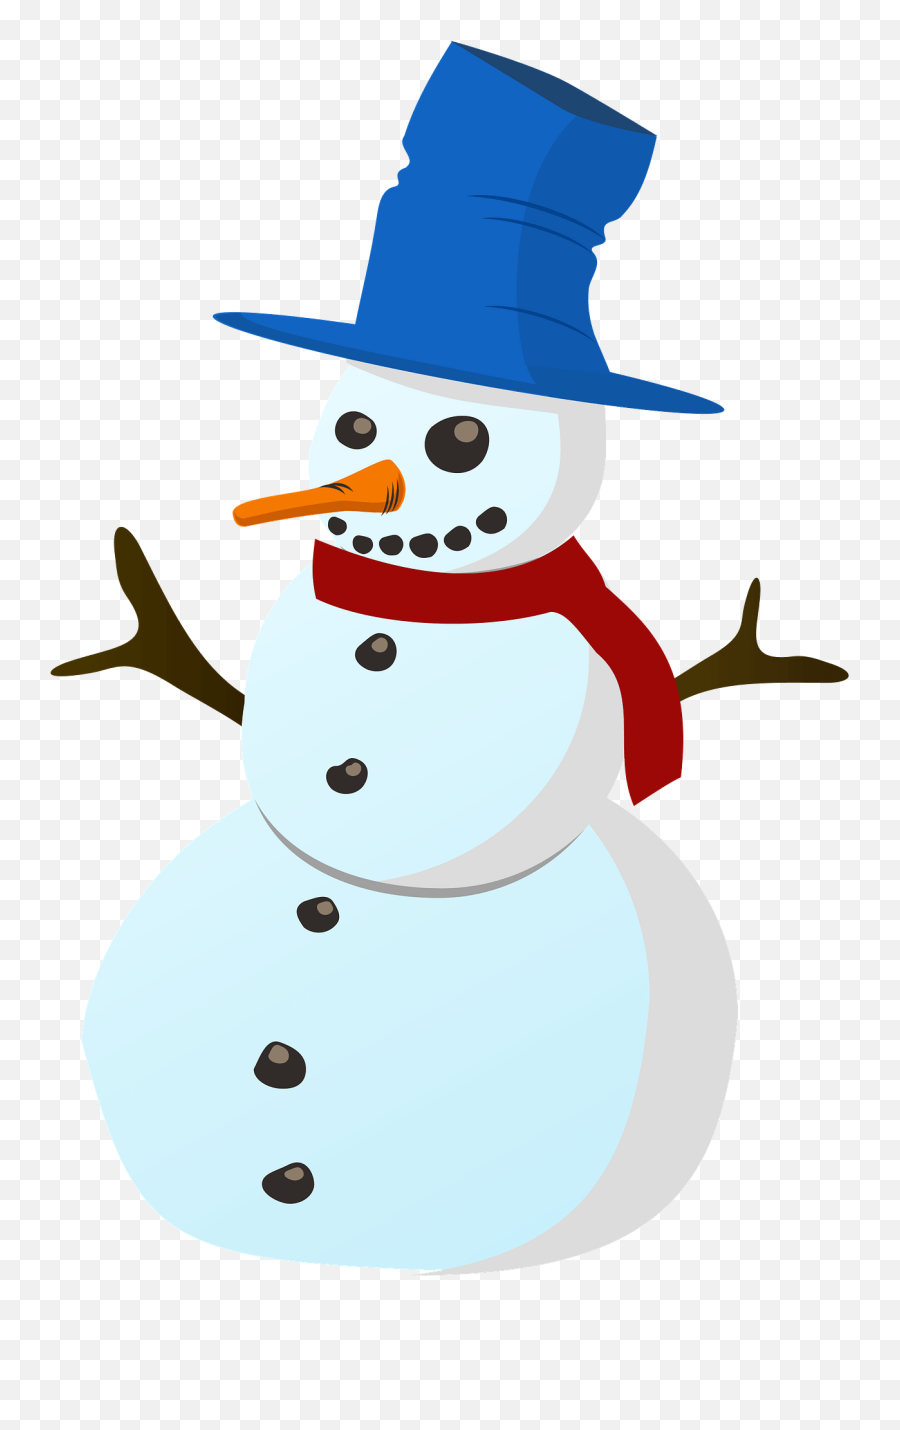 Snowman Free To Use Cliparts - Clipartix Winter Snowman Cartoon Emoji,Snowman Clipart Black And White